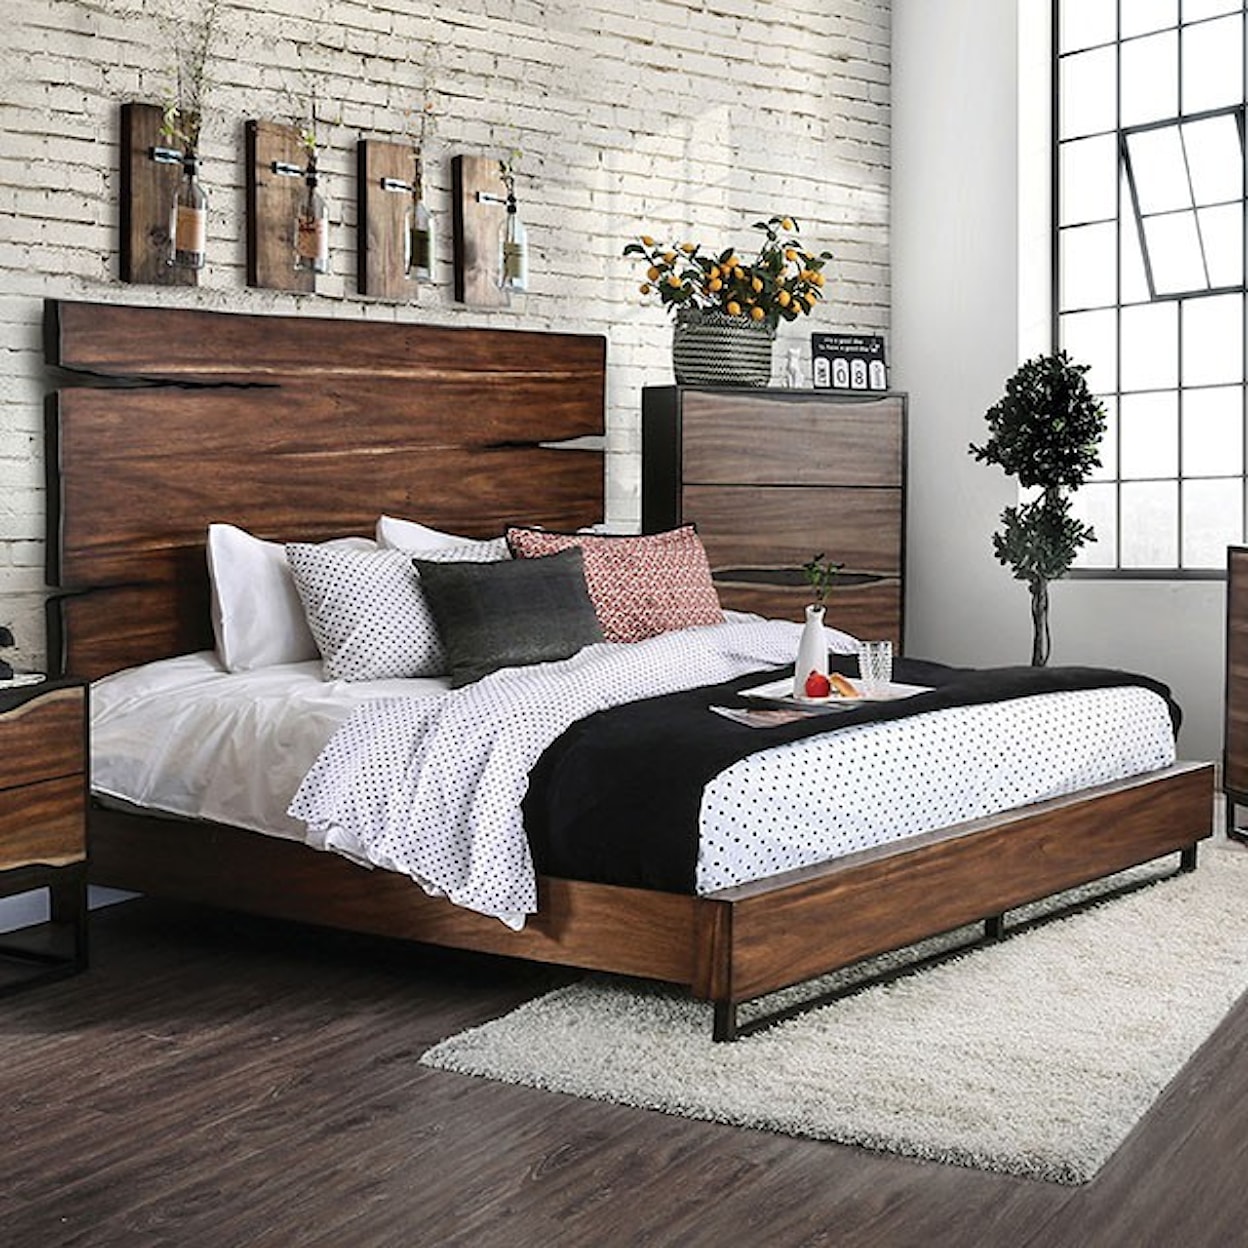 Furniture of America - FOA Fulton King Panel Bed